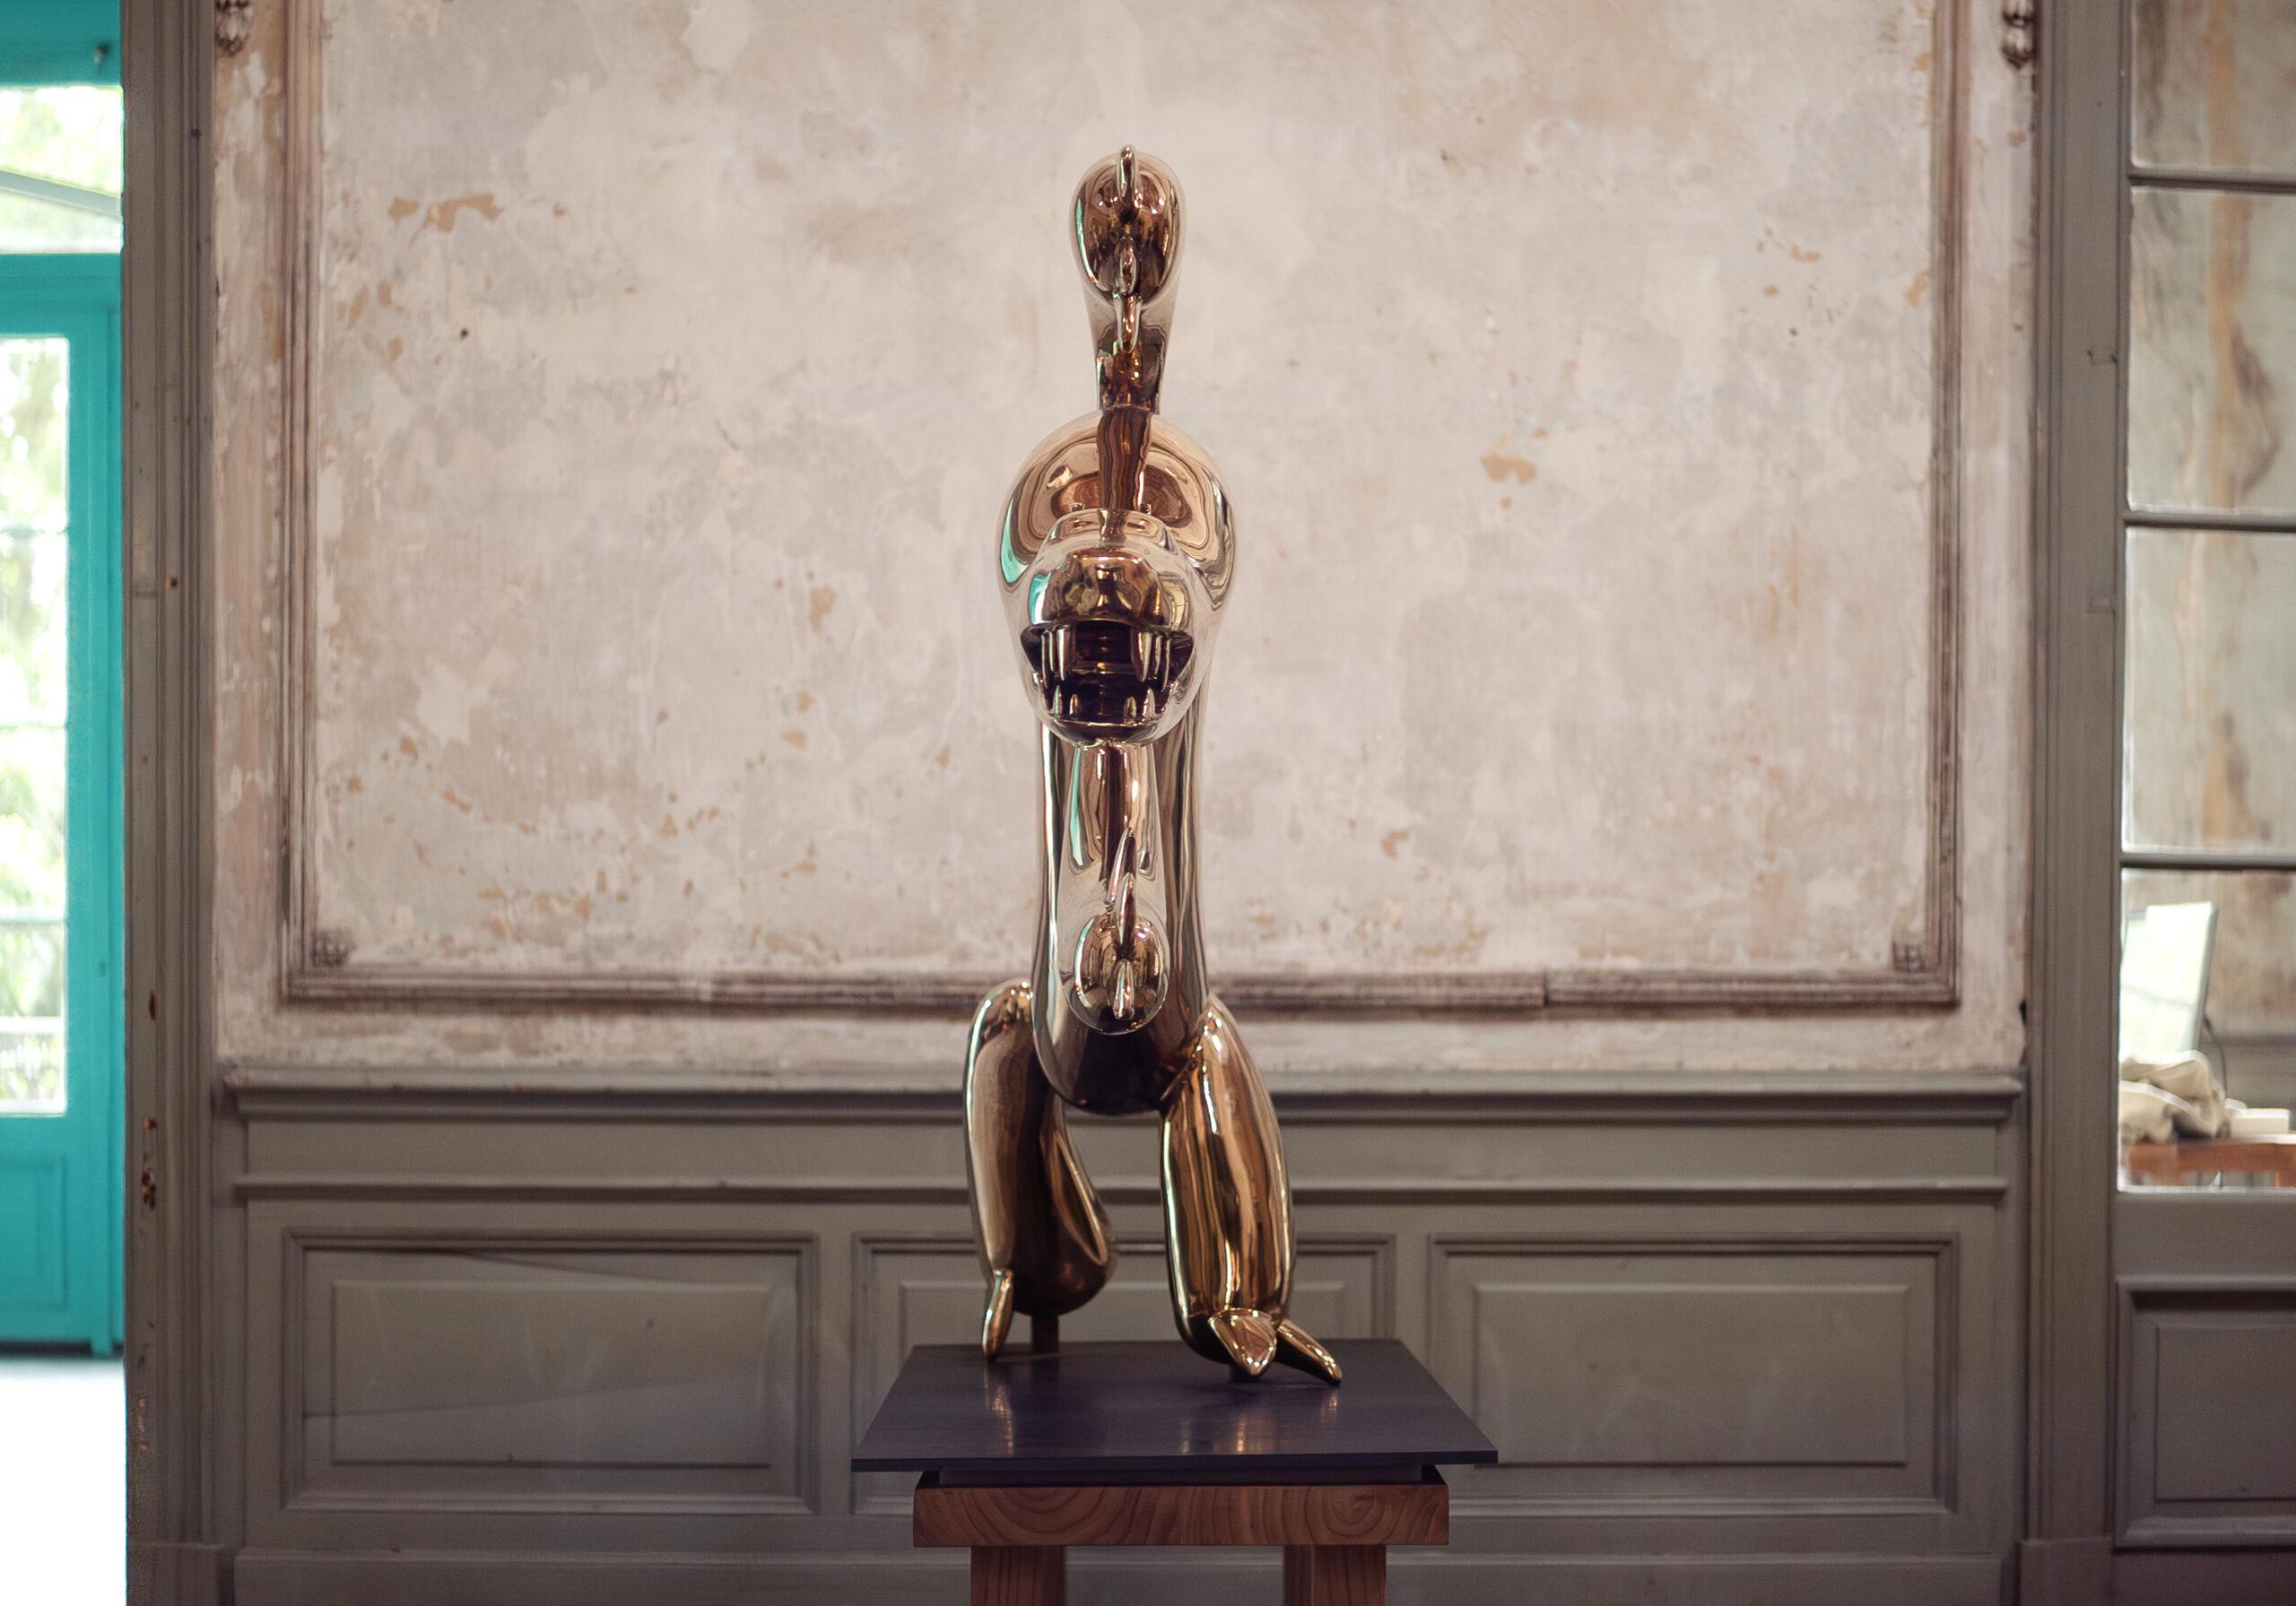 Tiger by Marcelo Martin Burgos - Polished bronze sculpture, golden, wild cat For Sale 9